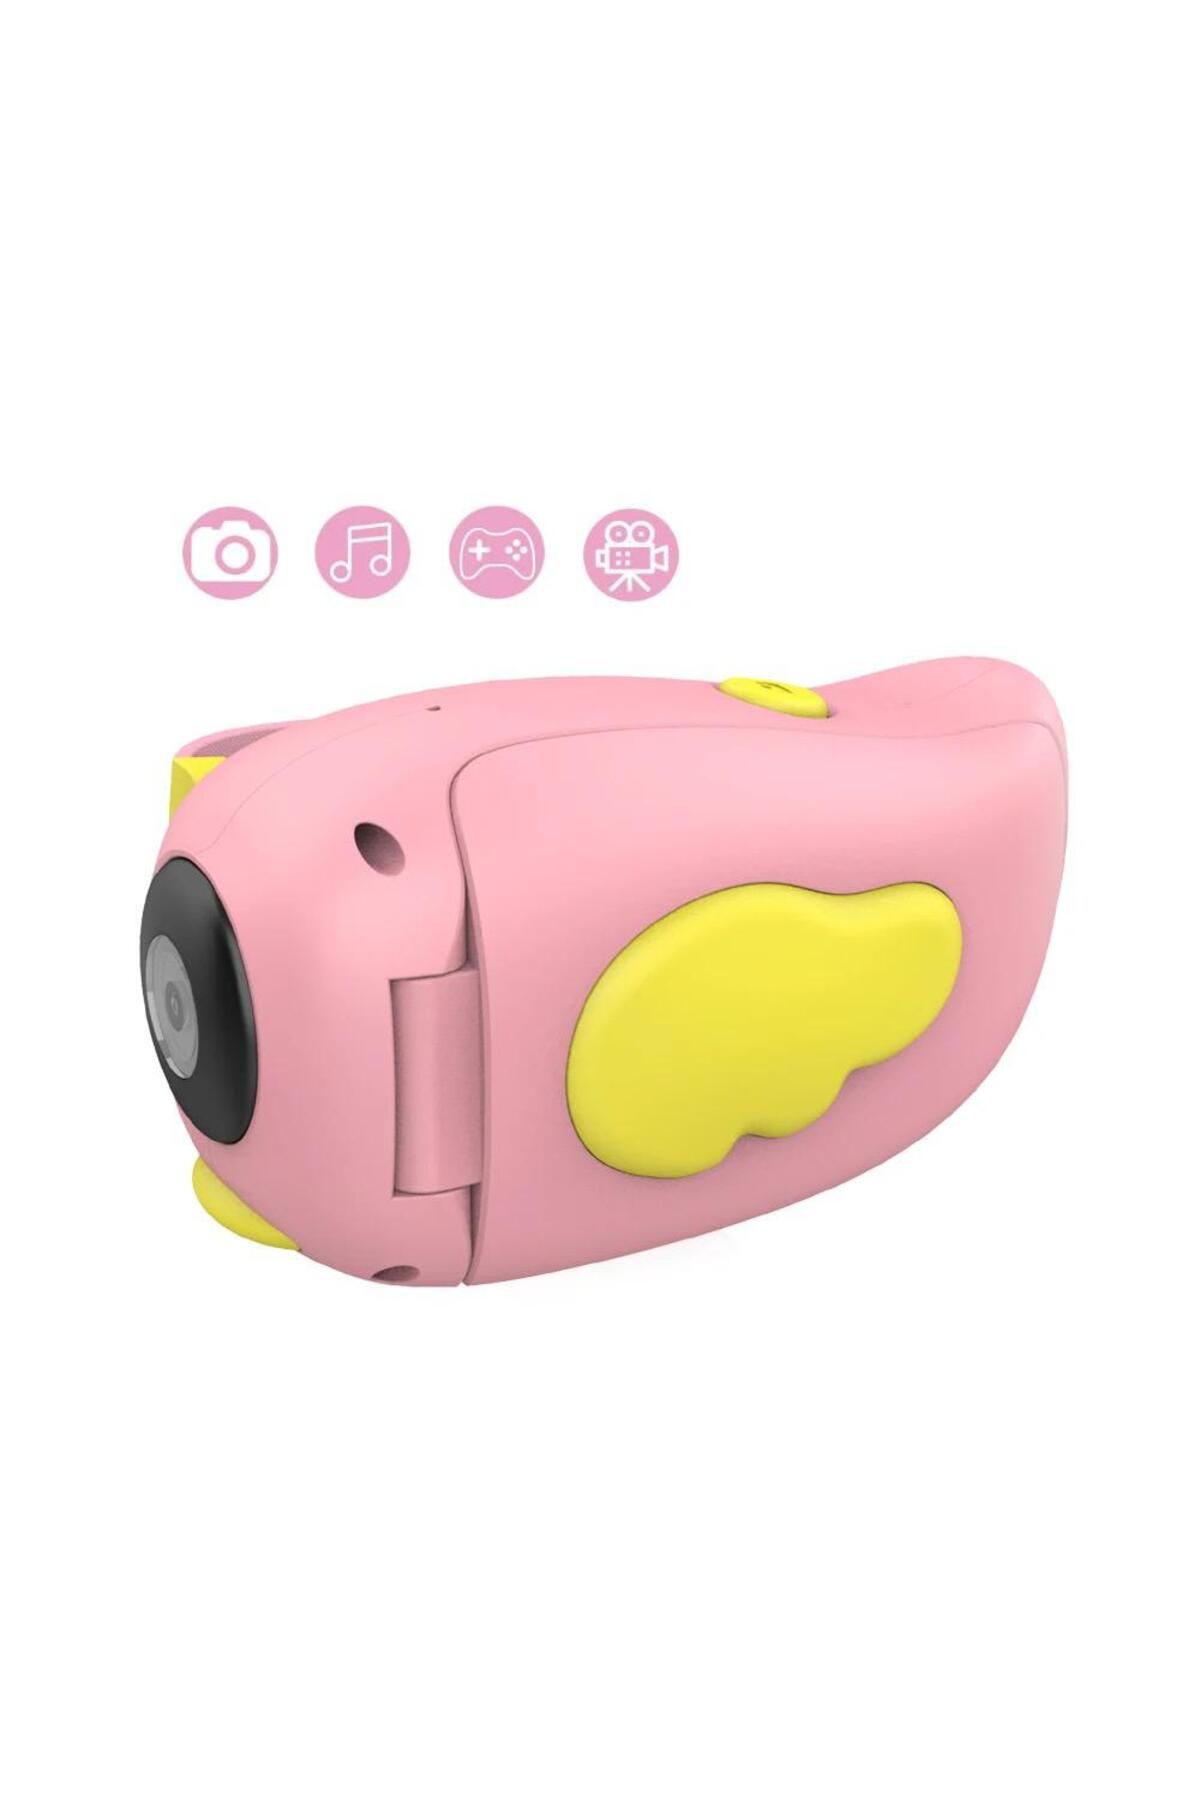 Laxsam Mini HD Kamera Çocuklar İçin Dijital Fotoğraf Makinesi Video kamera-pembe